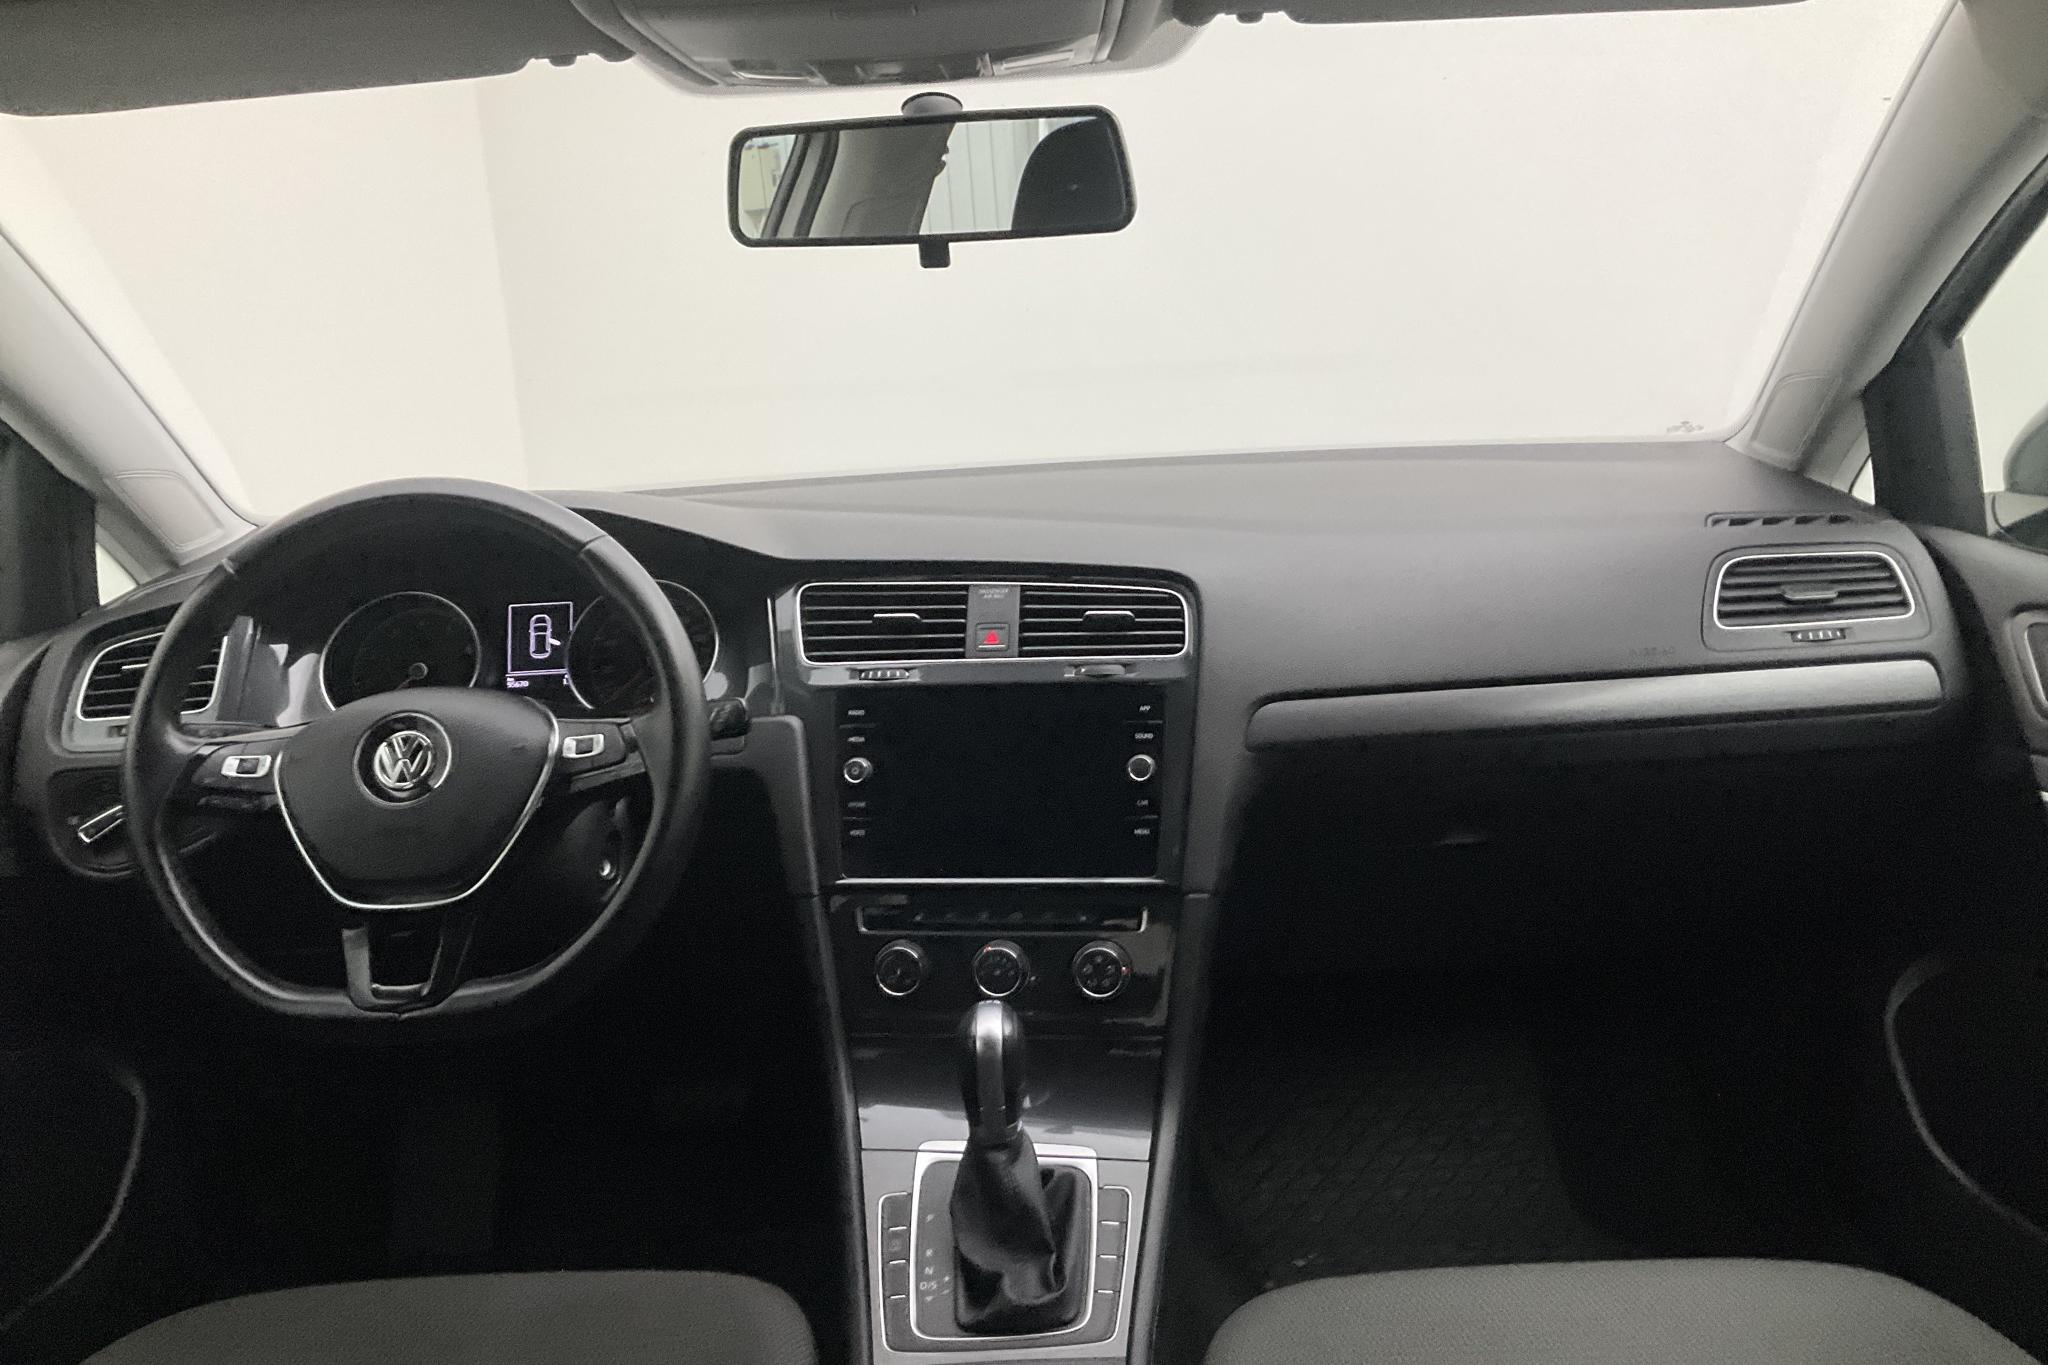 VW Golf VII 1.0 TSI 5dr (110hk) - 95 670 km - Automatic - silver - 2018